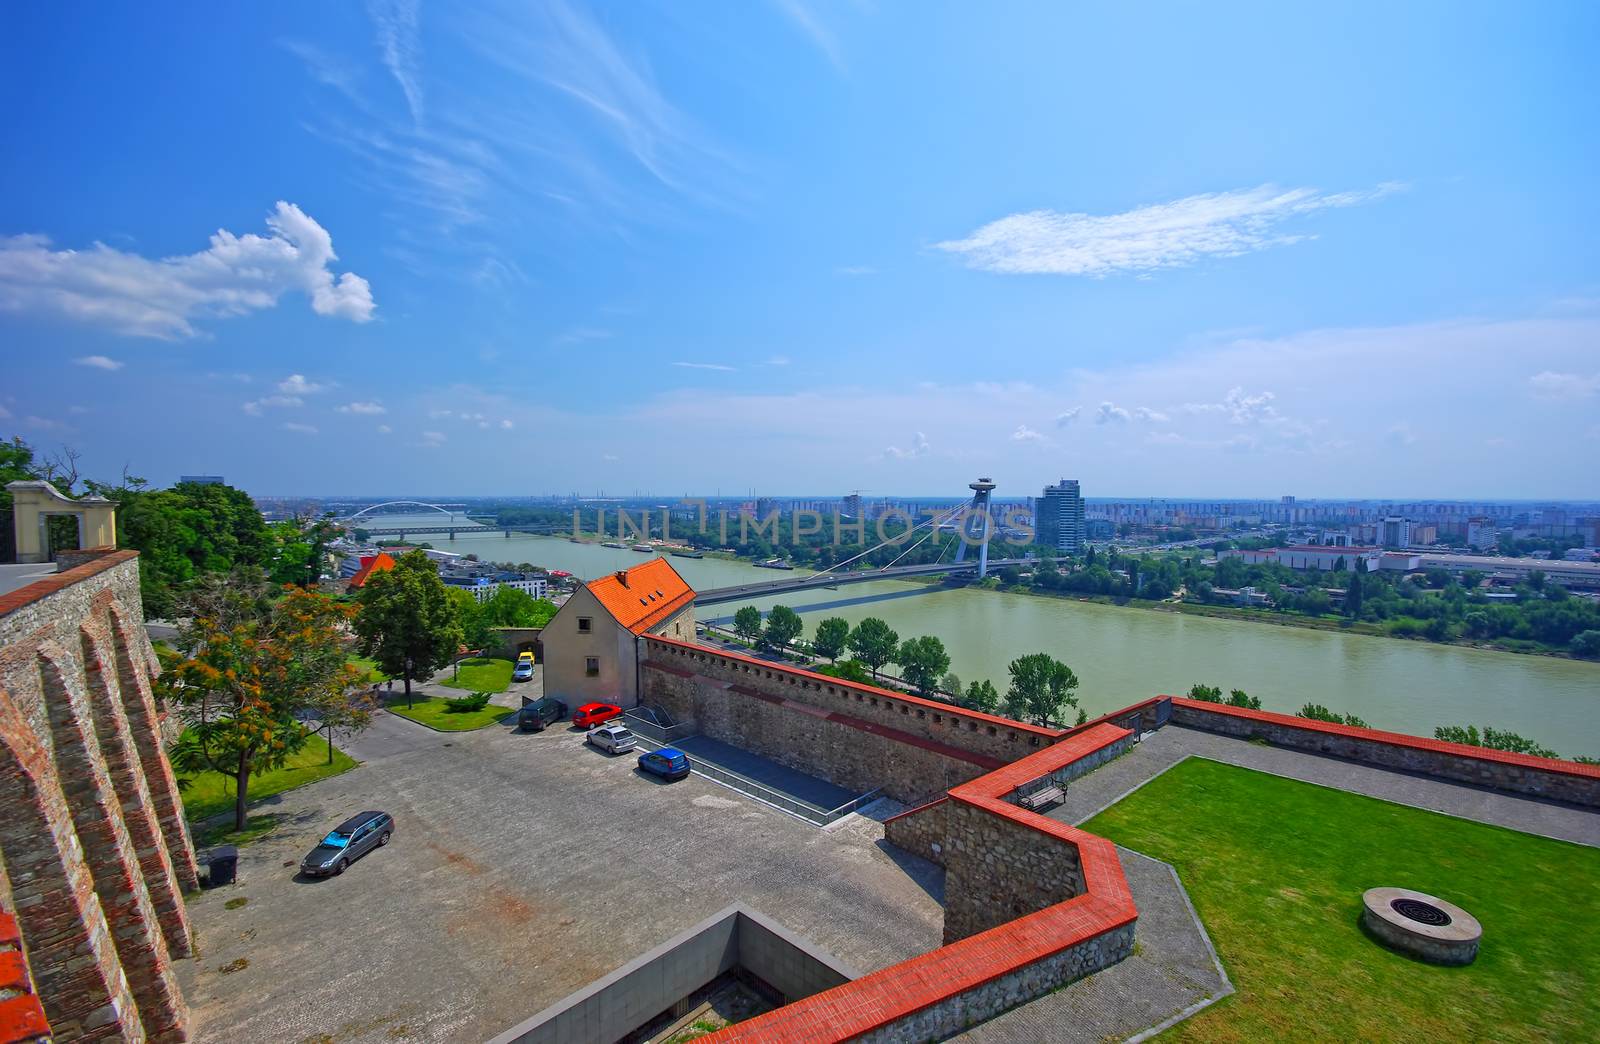 Danube river landscape and aerial city, summer landscape in Bratislava